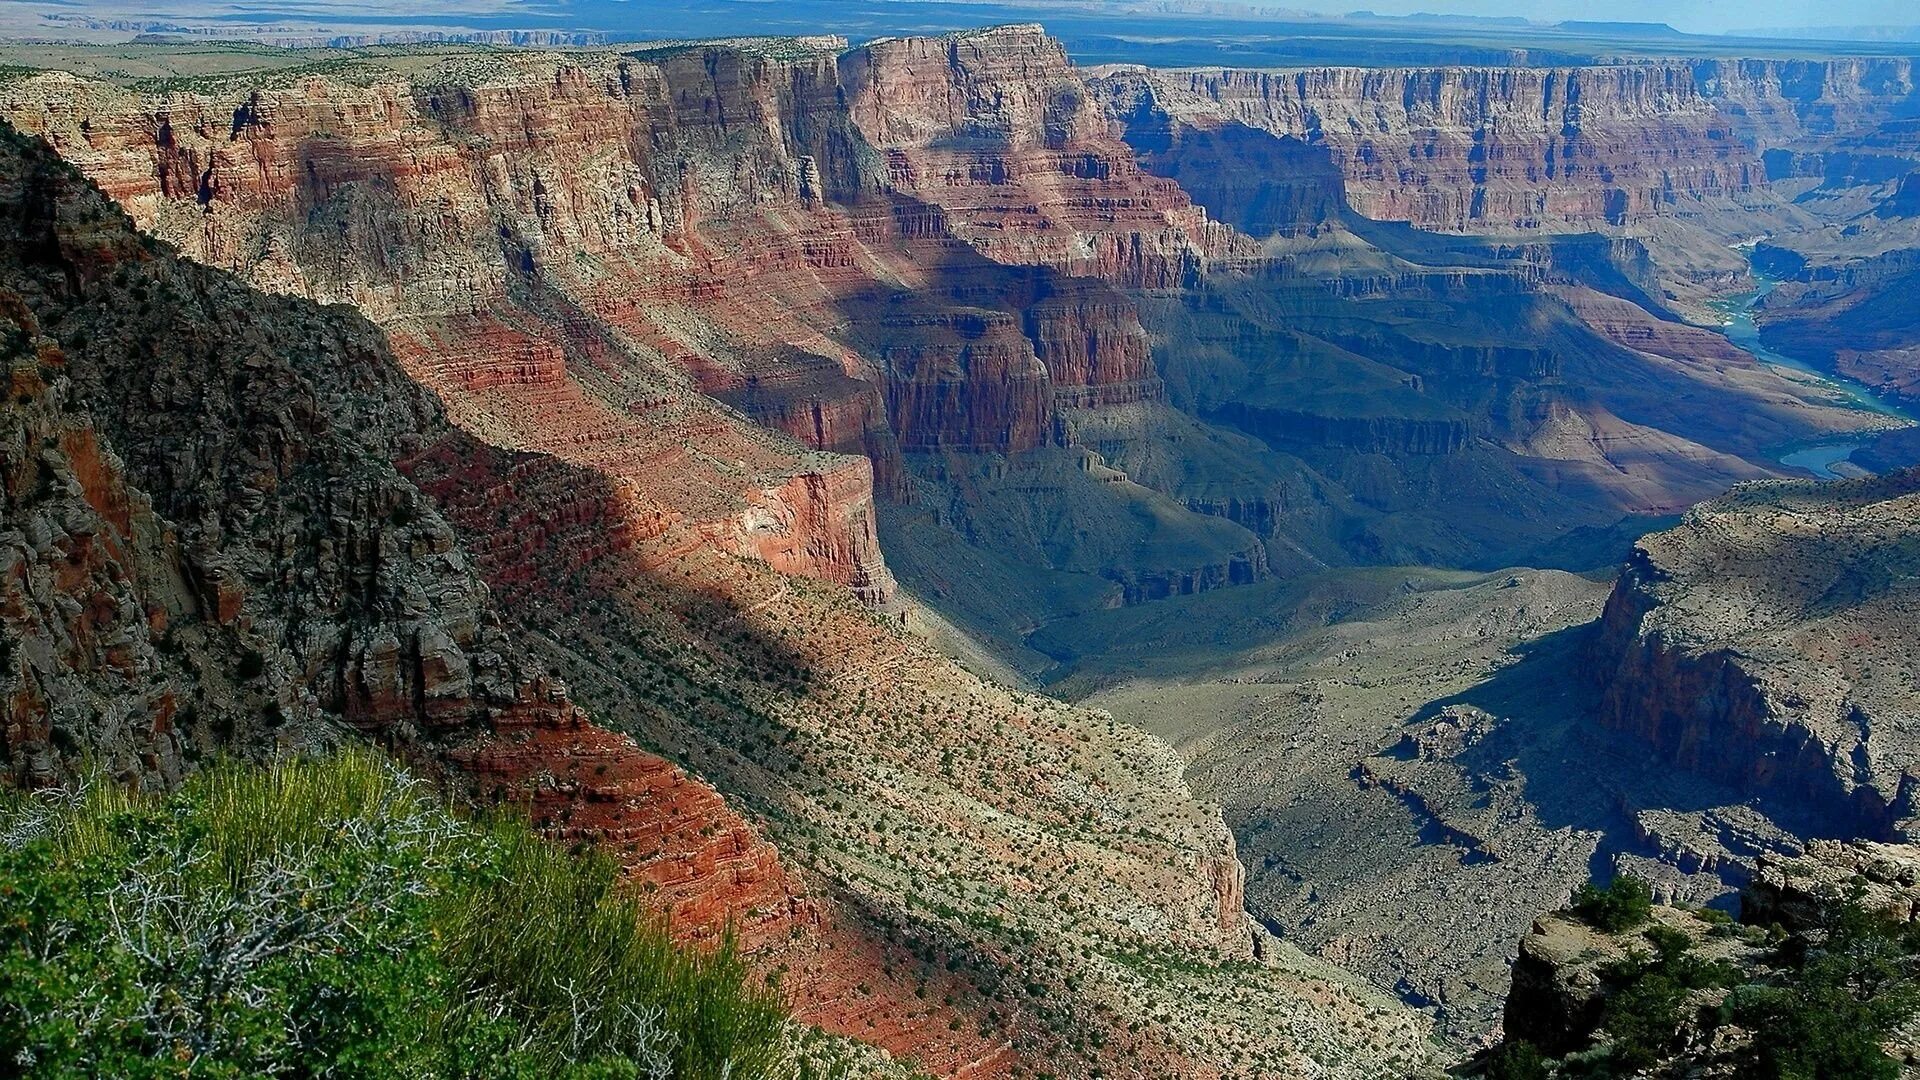 Blue canyon. Гранд-каньон (Grand Canyon). Великий каньон в Америке. Гранд каньон США Сулакский каньон.